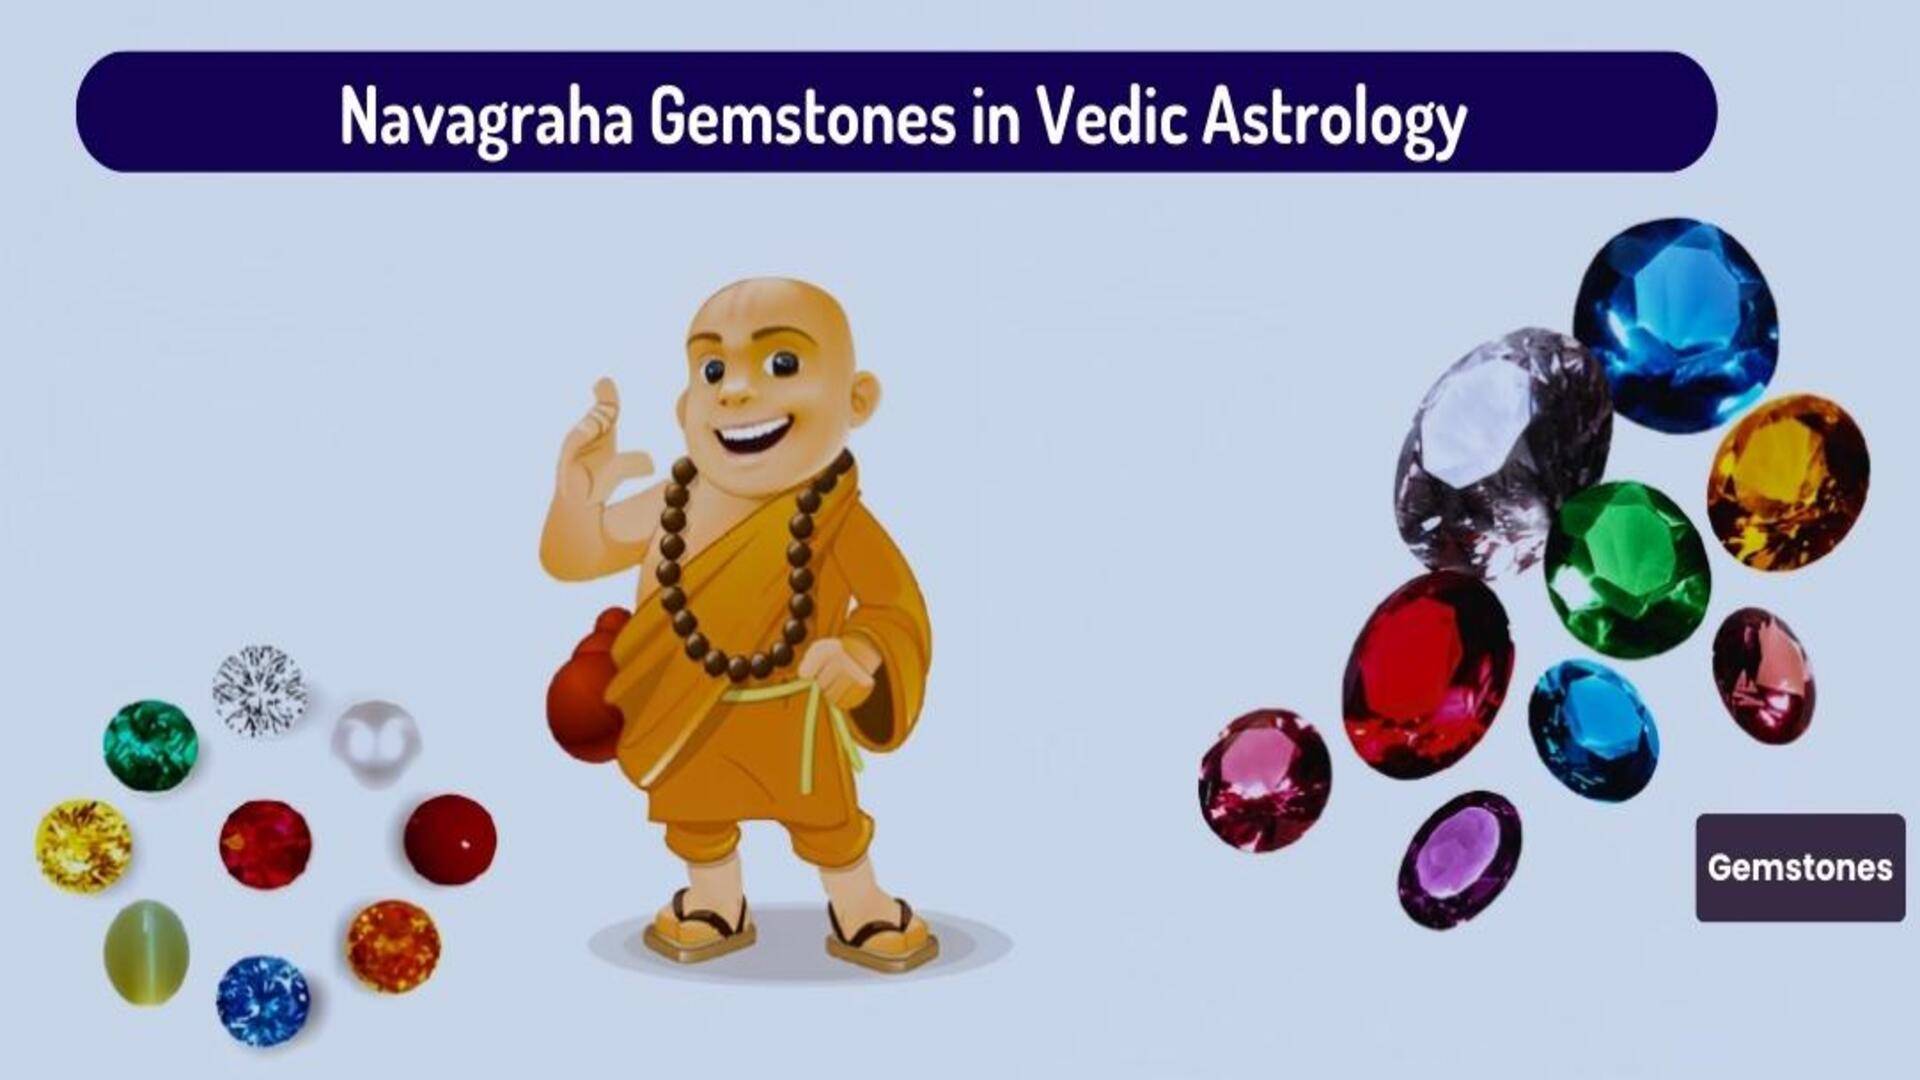 Navagraha-Gemstones-in-Vedic-Astrology_1920x1080